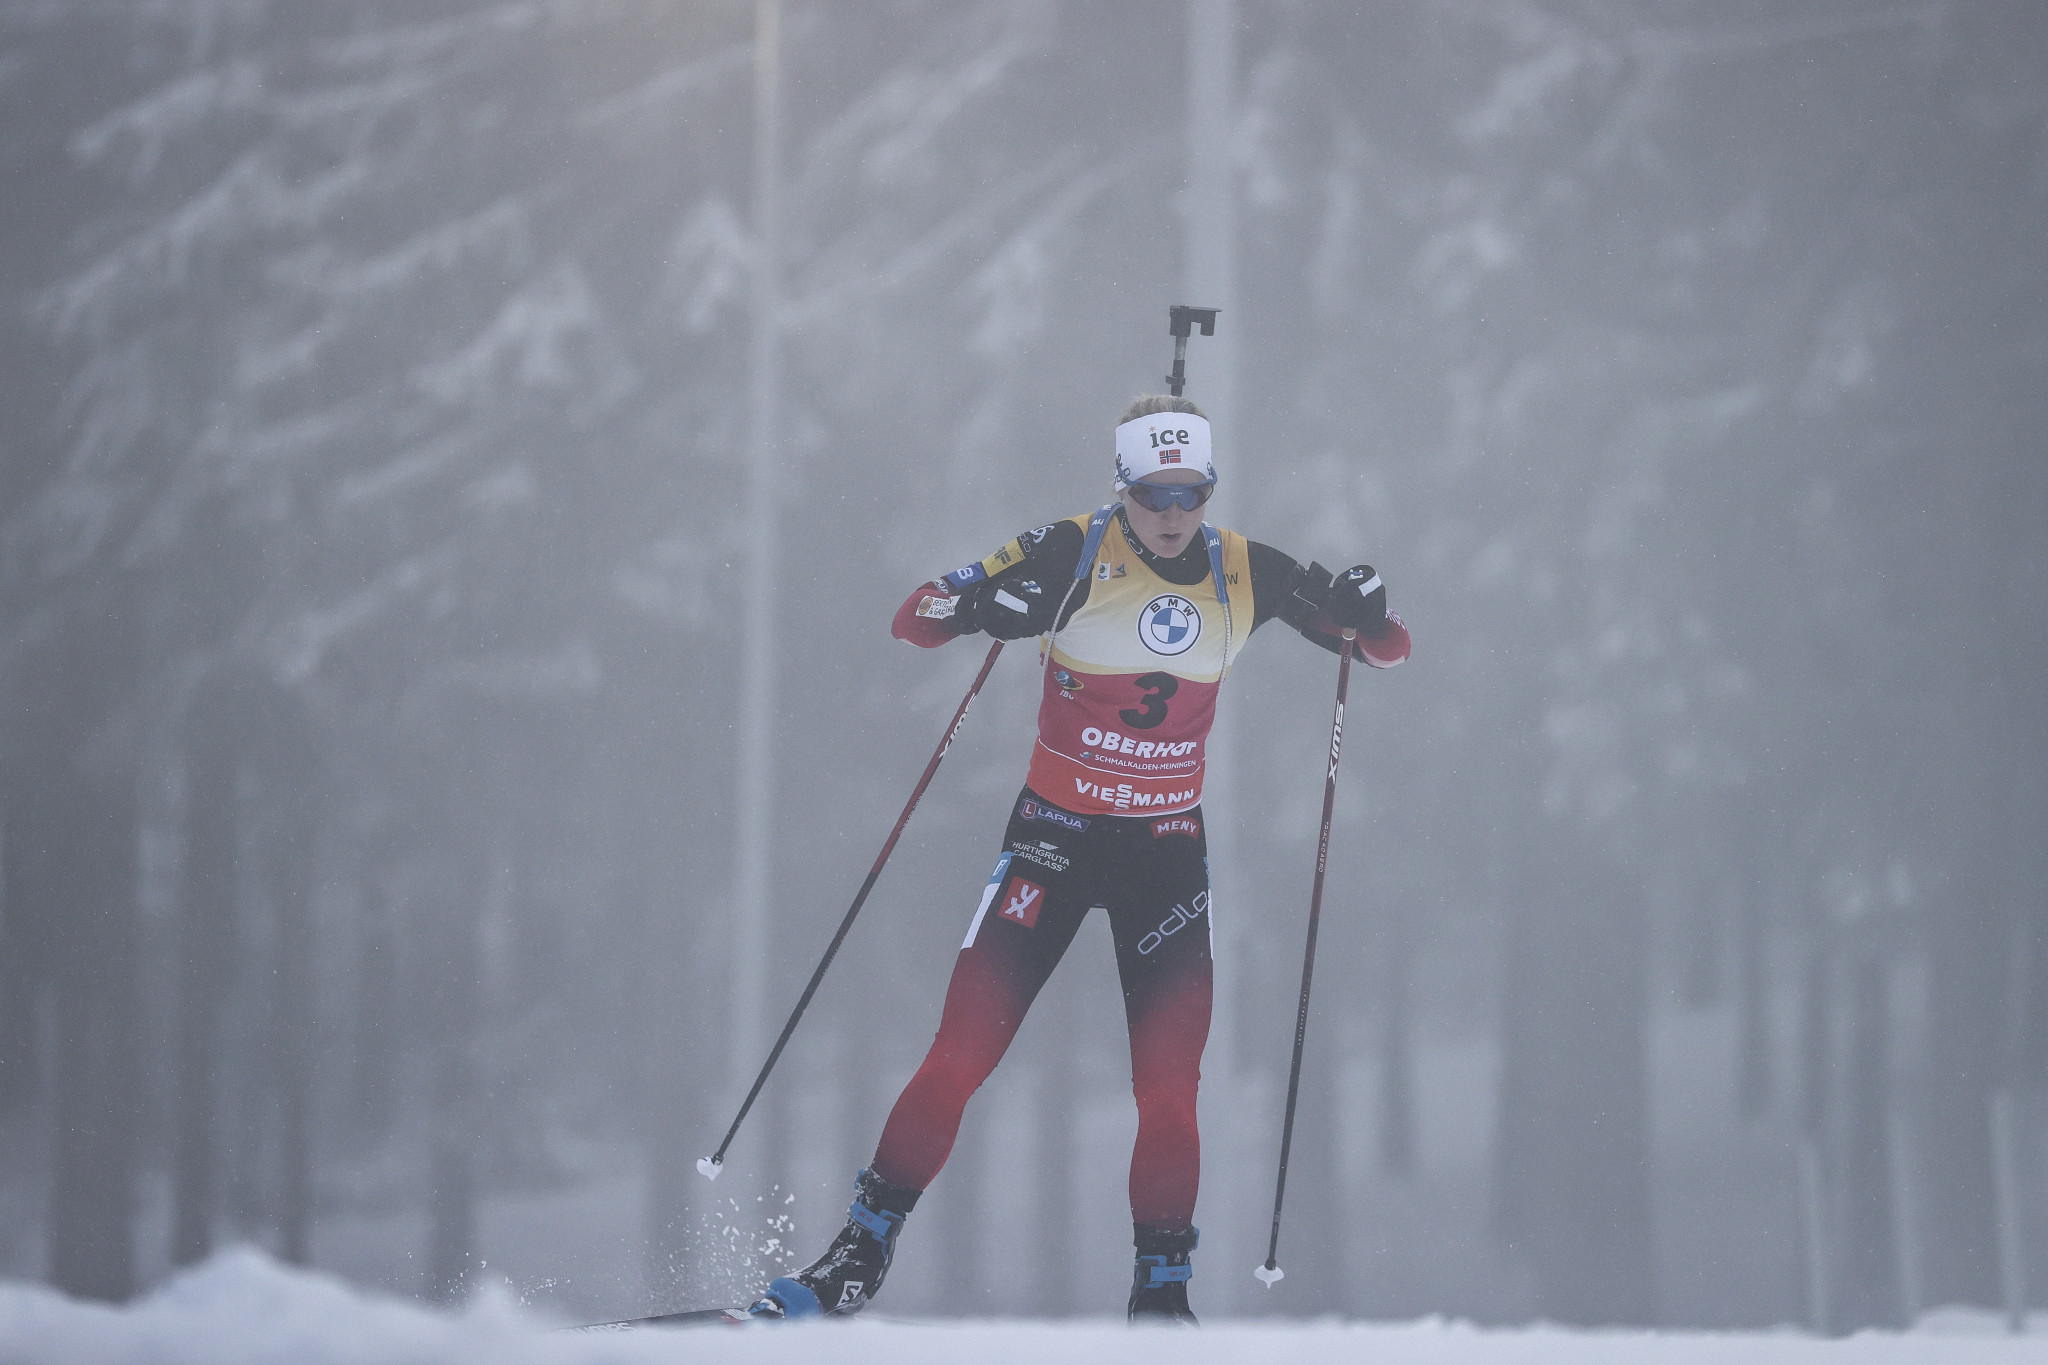 Røiseland seeking to extend overall advantage at Biathlon World Cup